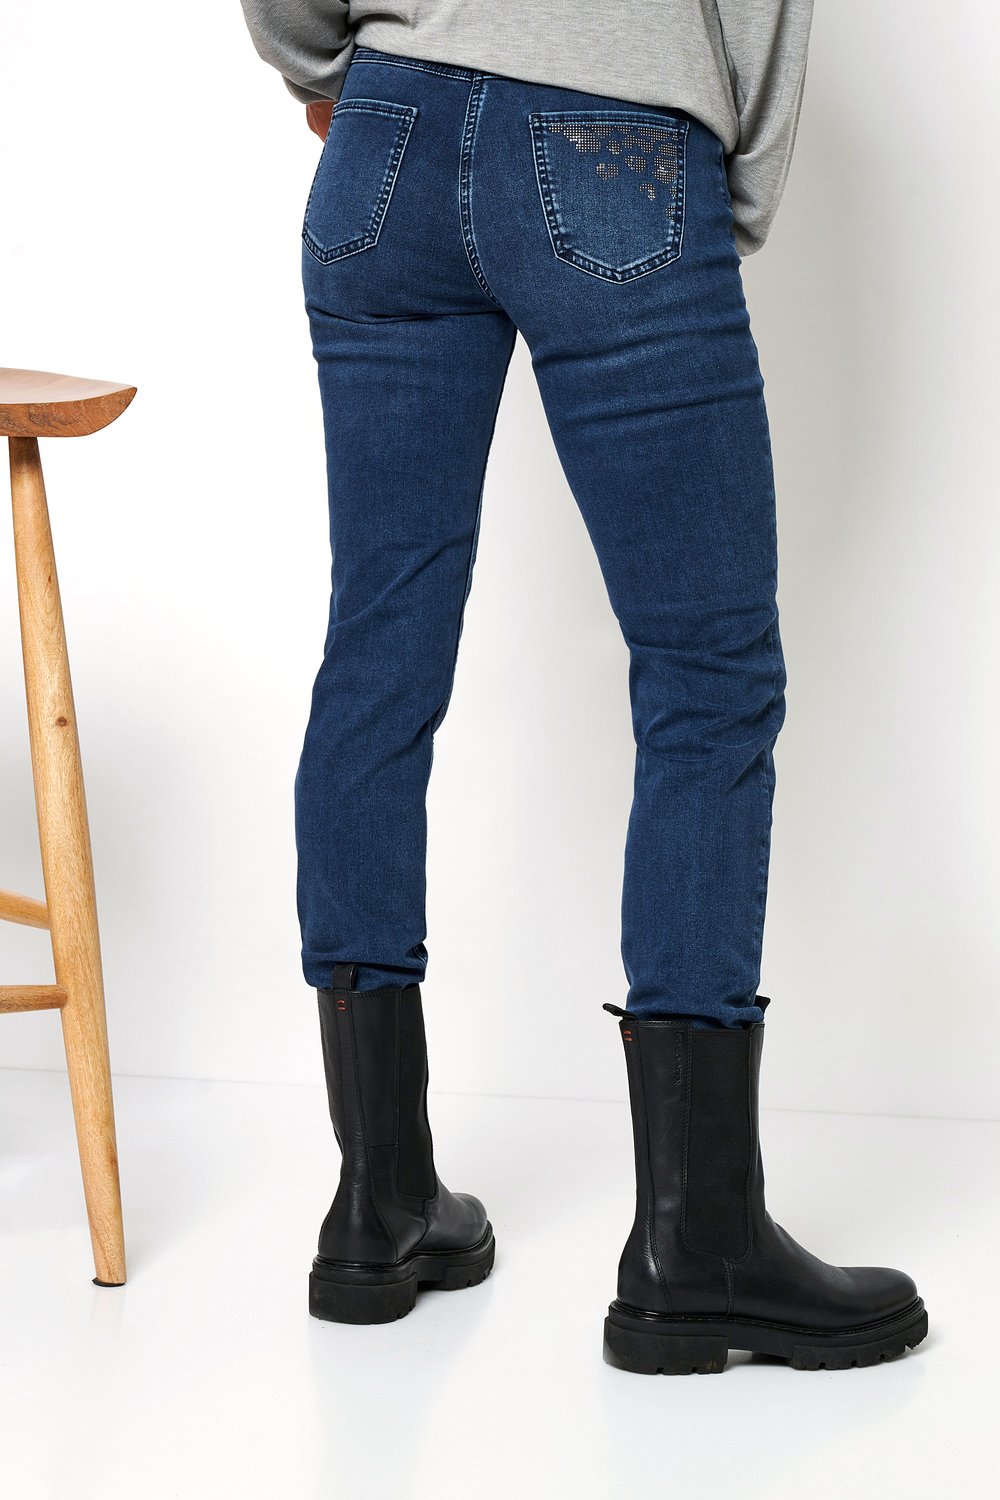 Damen-Jeans "Perfect Shape Skinny" aus Satin Touch Denim